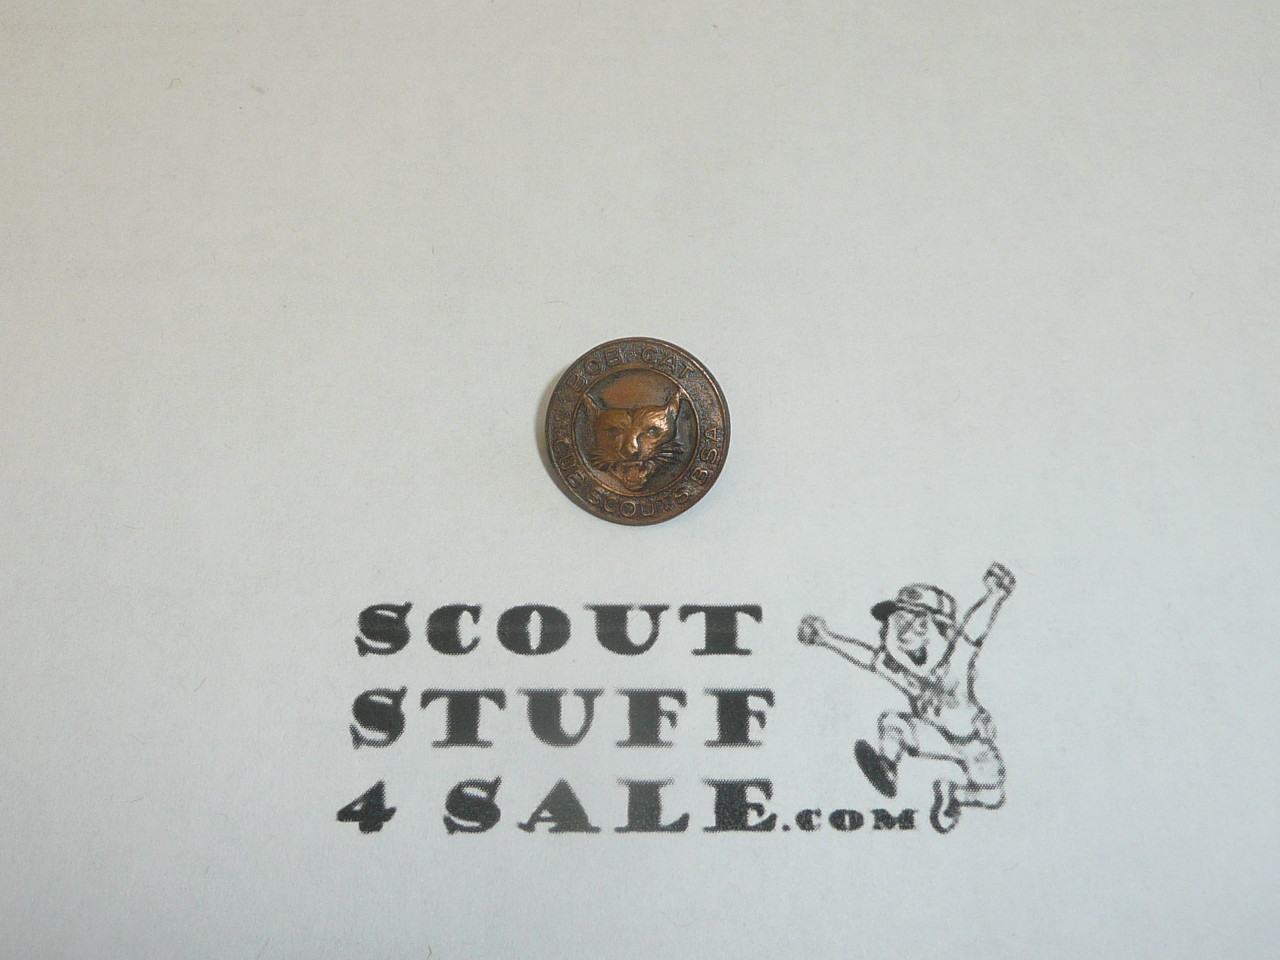 Bobcat Round "BOB CAT CUB SCOUTS BSA" Cub Scout Rank Pin, Crude clasp, EARLY